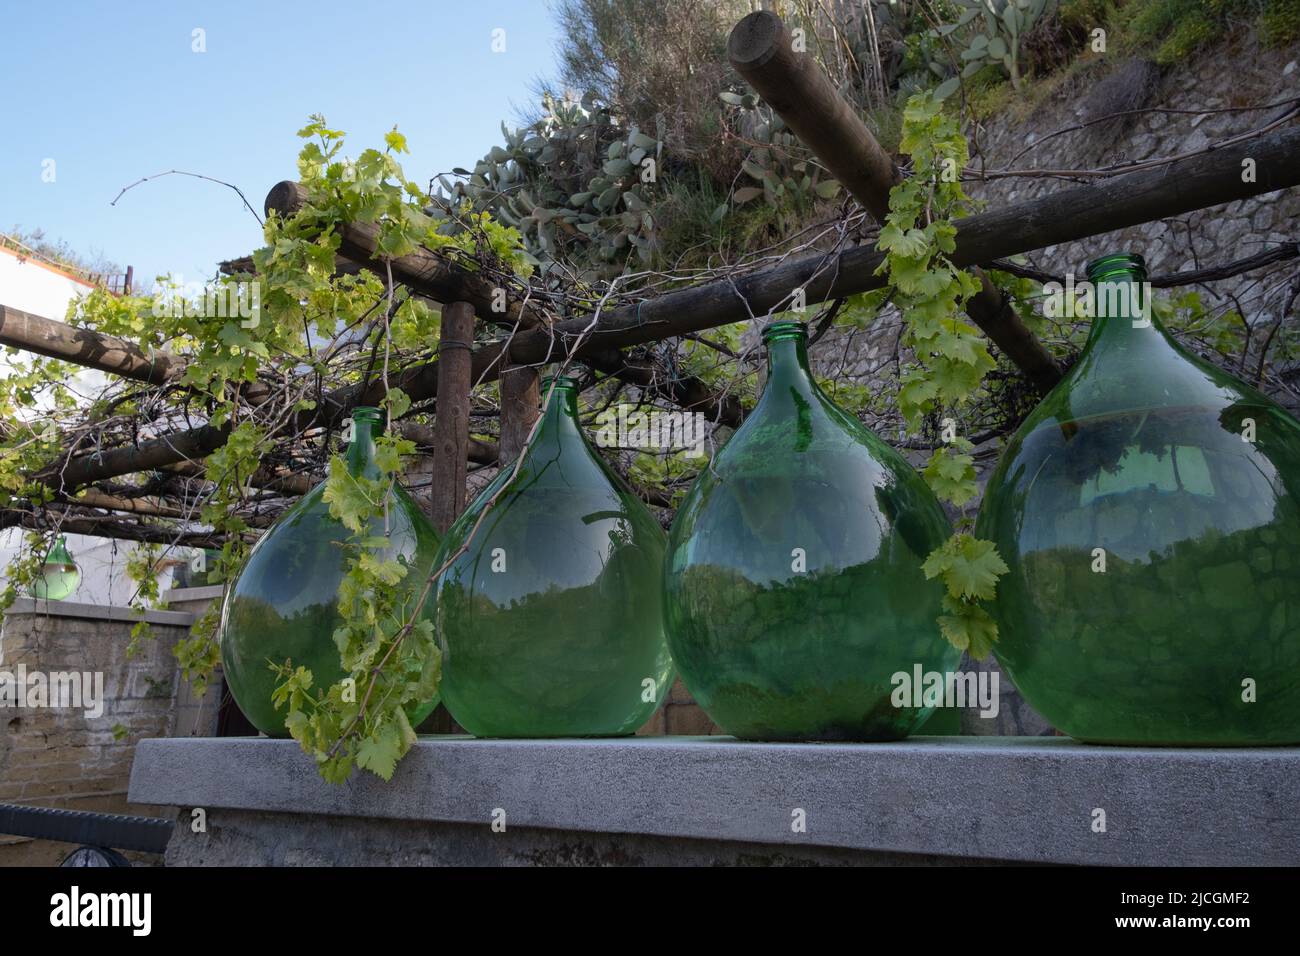 Old big wine bottles in the vineyard Stock Photo